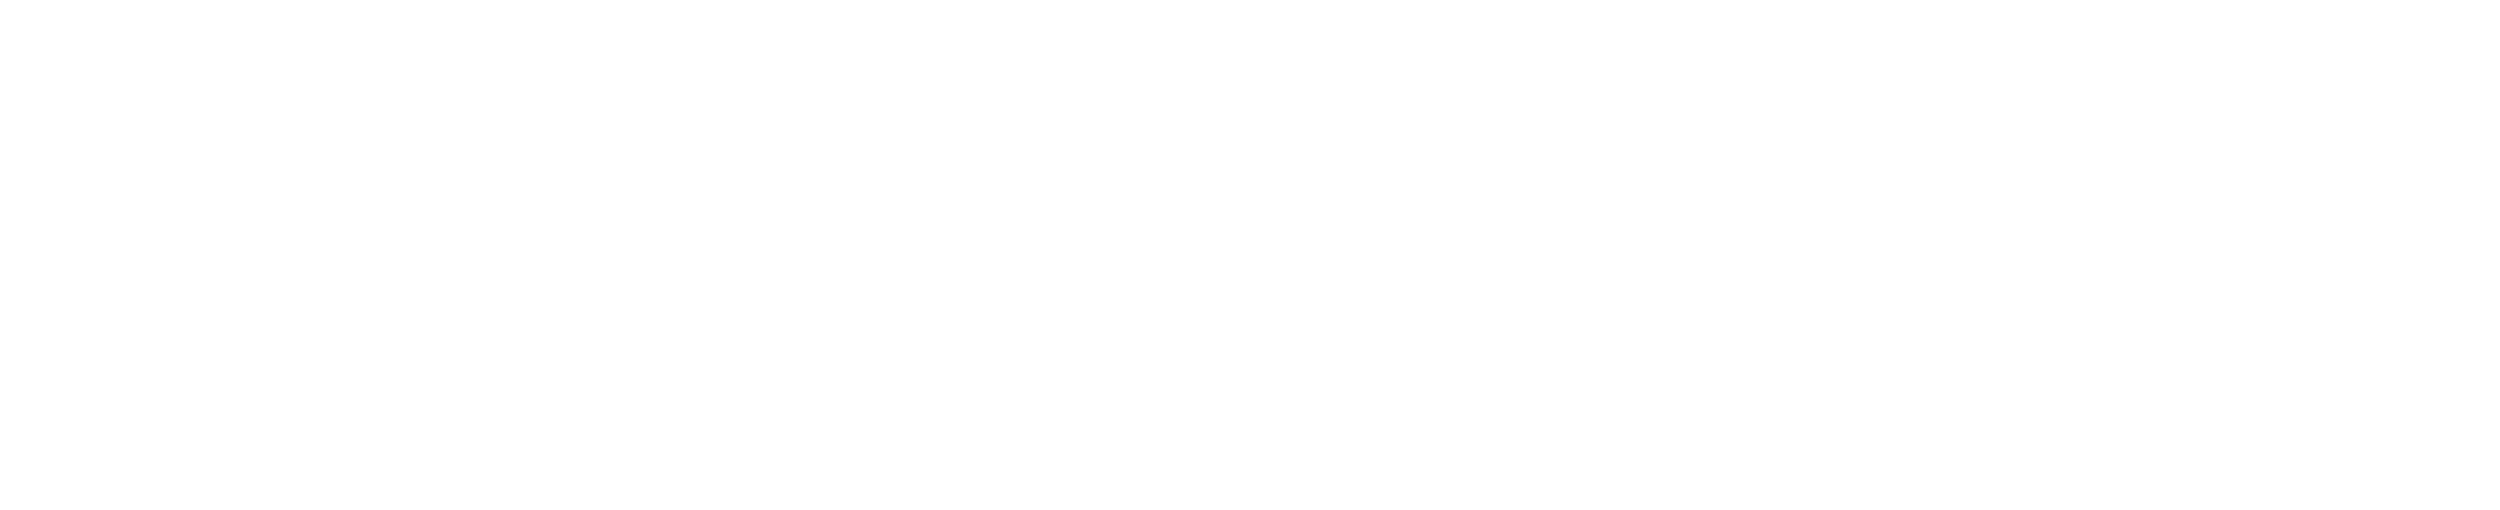 182-1823367_essence-logo-essence-2018-festival.png